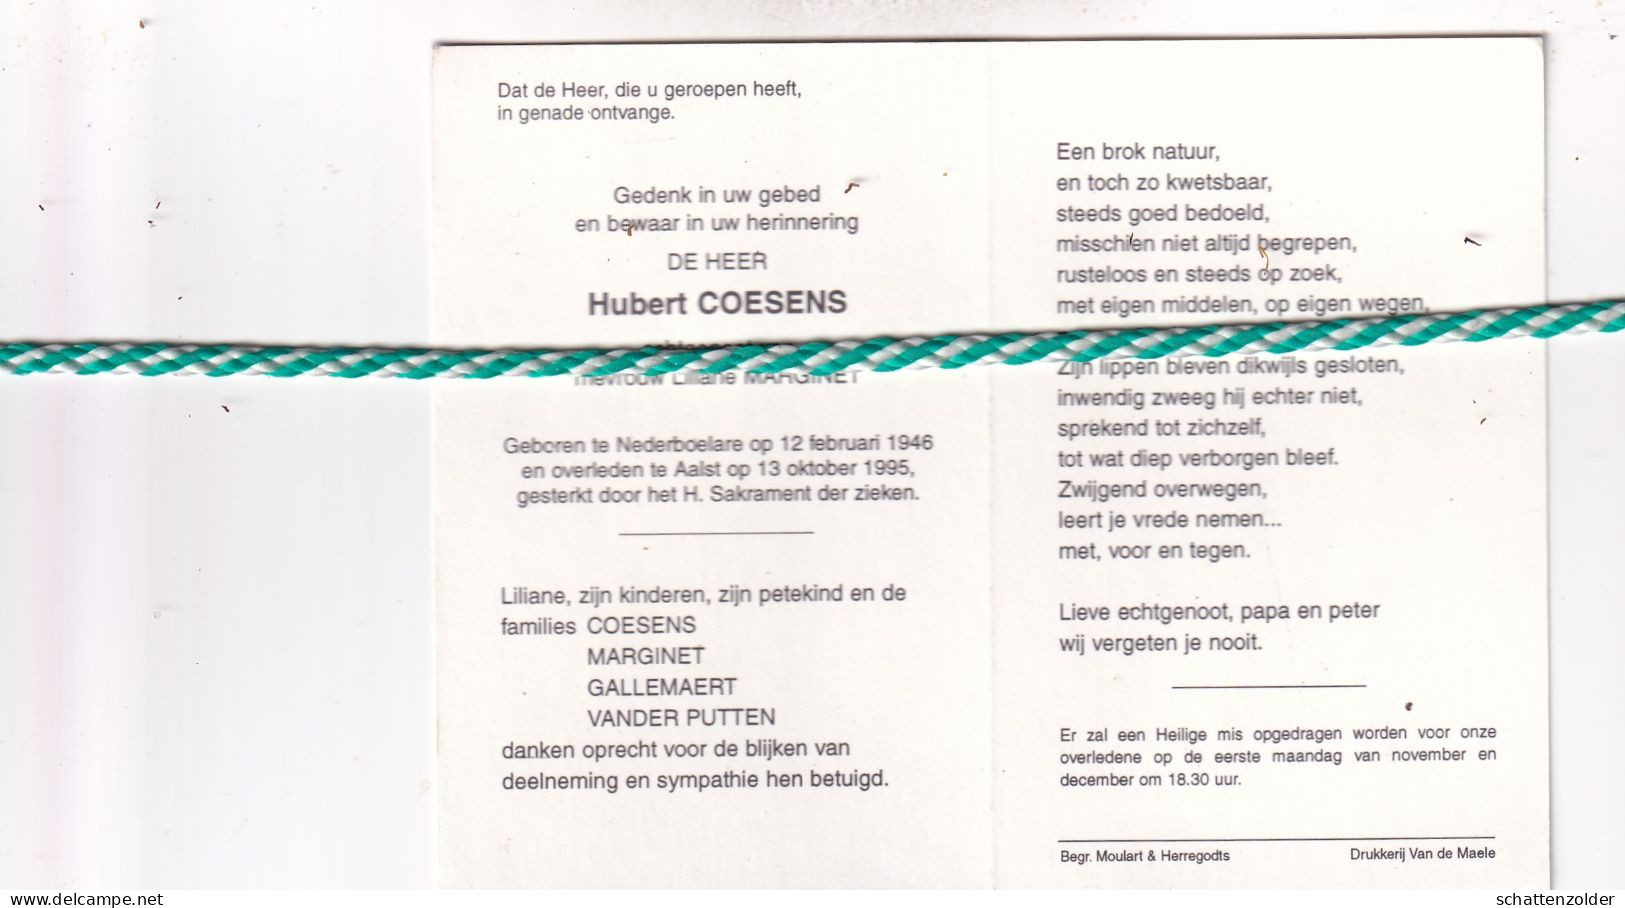 Hubert Coesens-Marginet, Nederboelare 1946, Aalst 1995. Foto - Obituary Notices